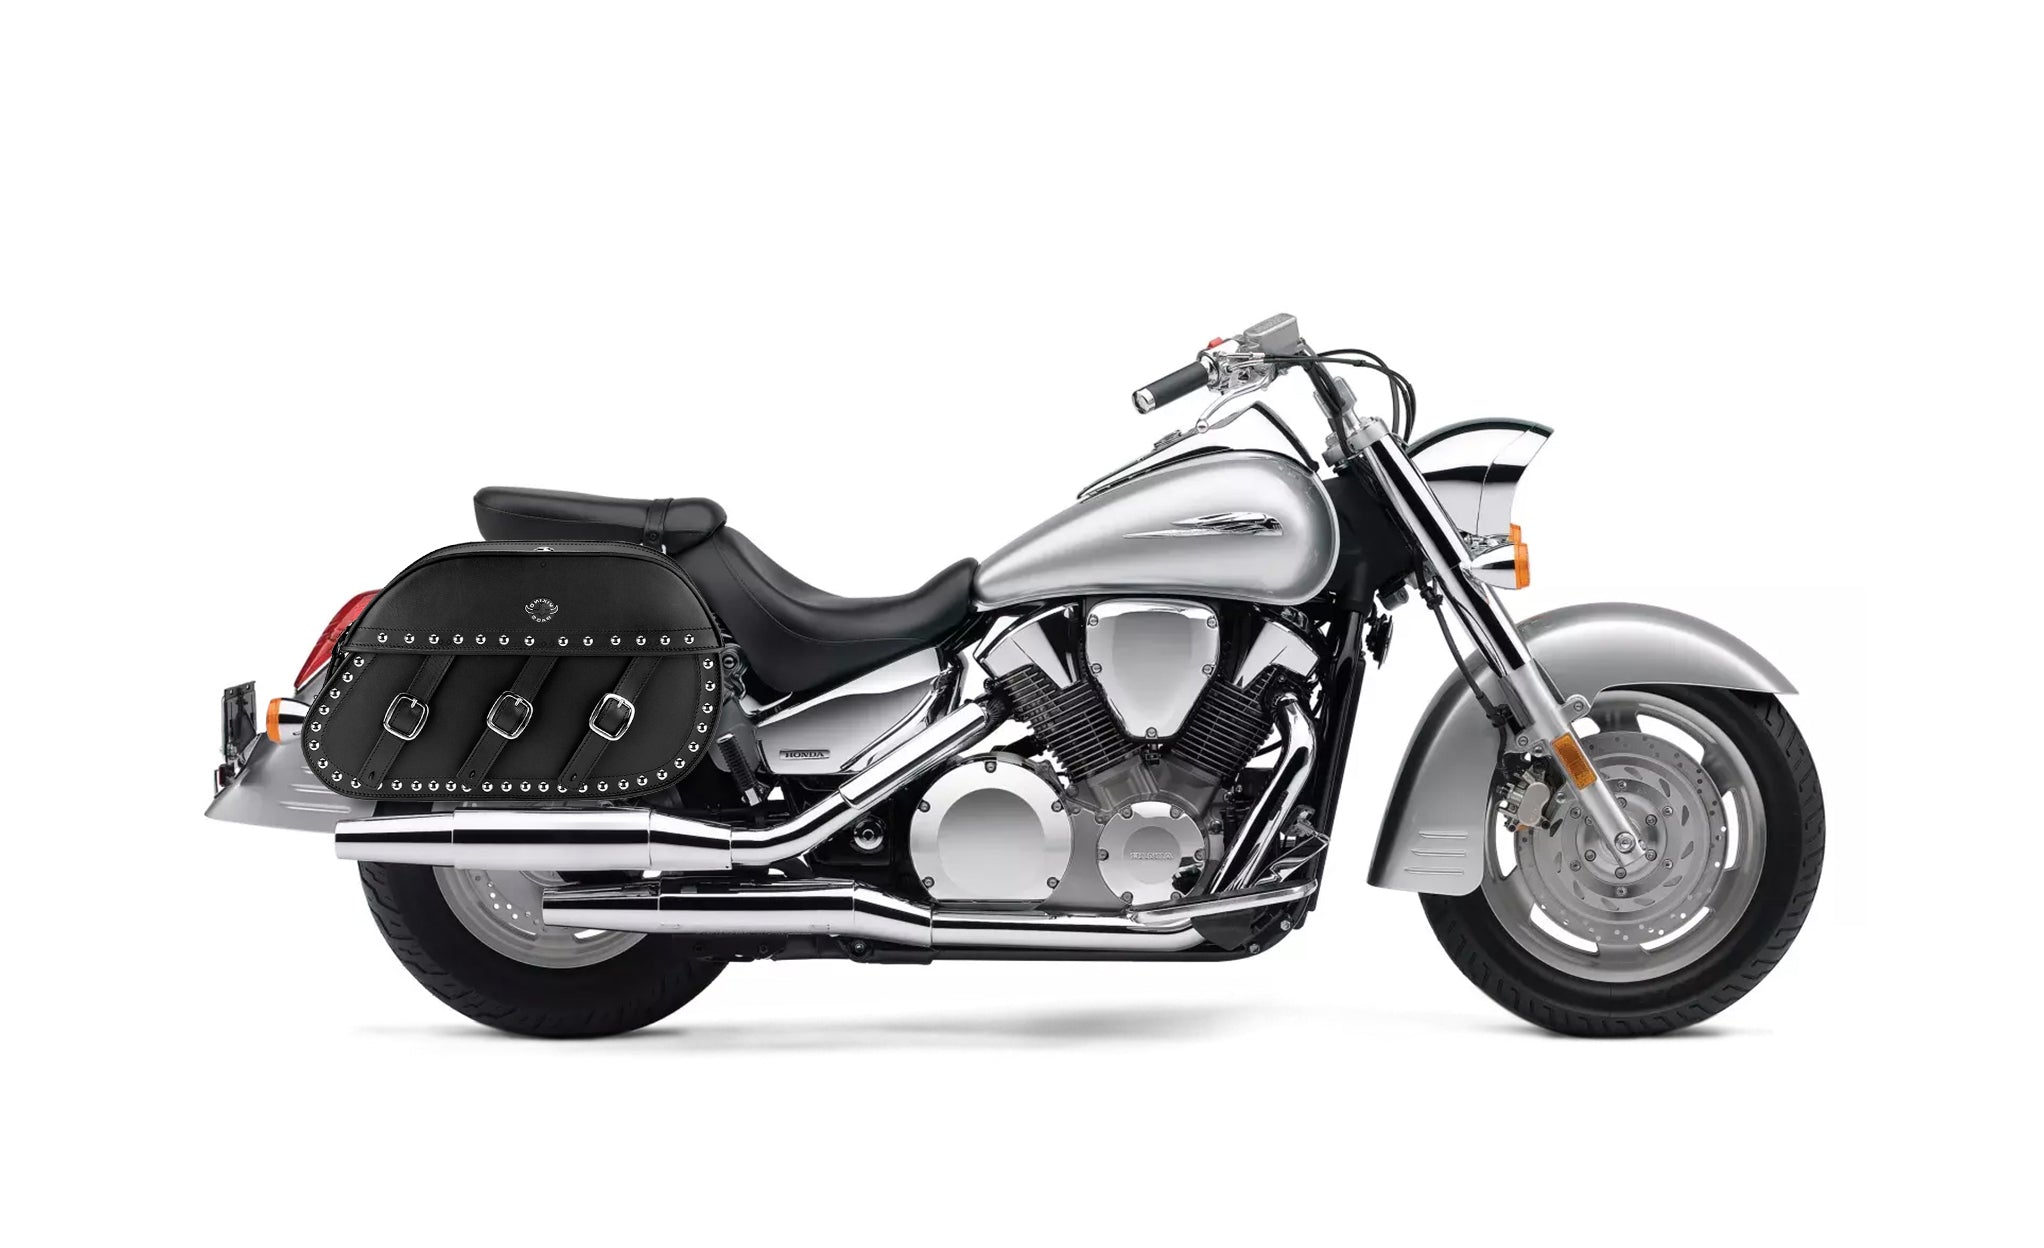 34L - Trianon Extra Large Honda VTX 1800 S Studded Leather Motorcycle Saddlebags on Bike Photo @expand